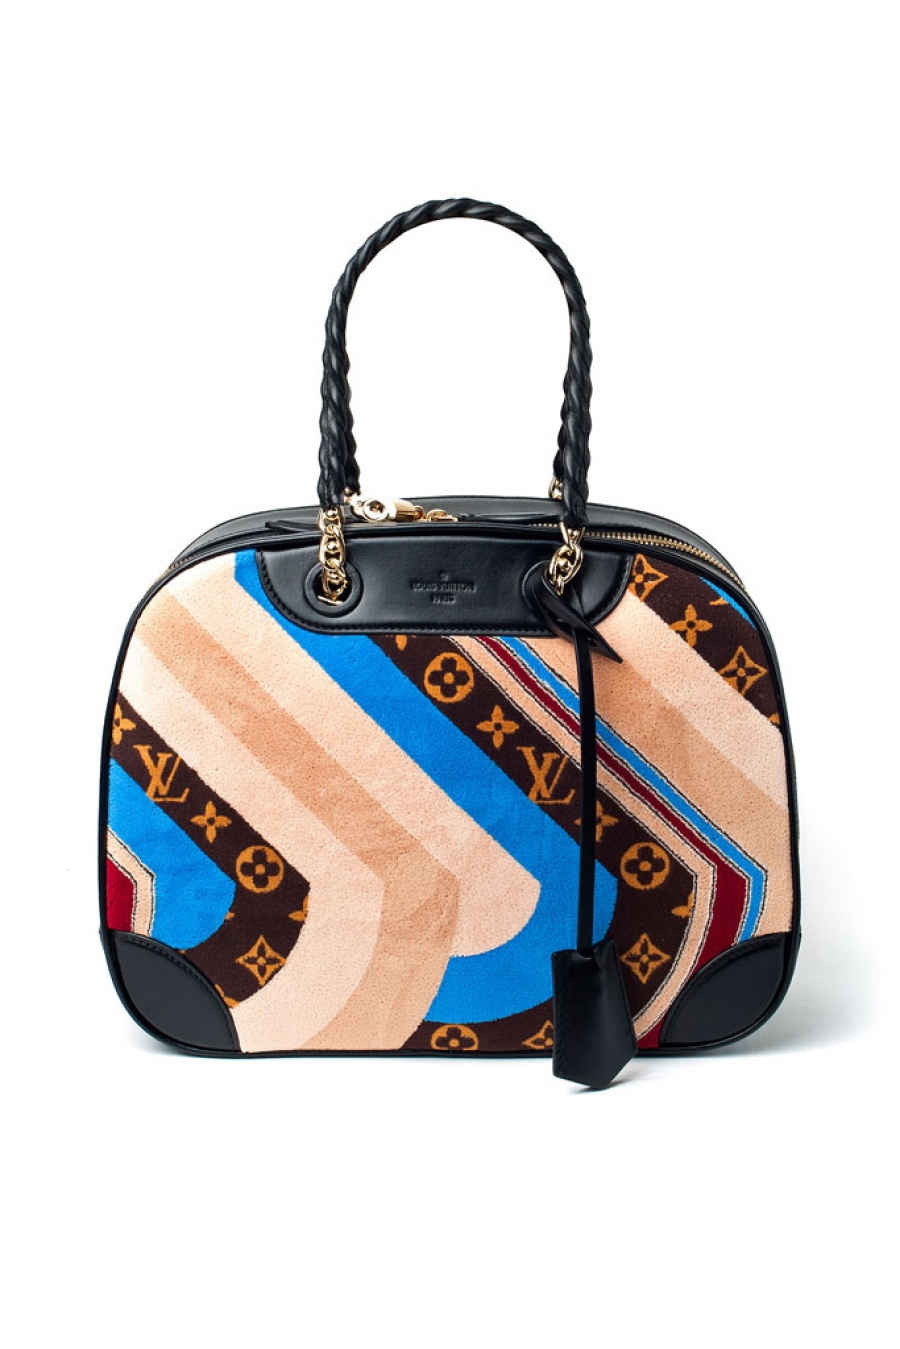 Louis Vuitton Fall 2014 Bag